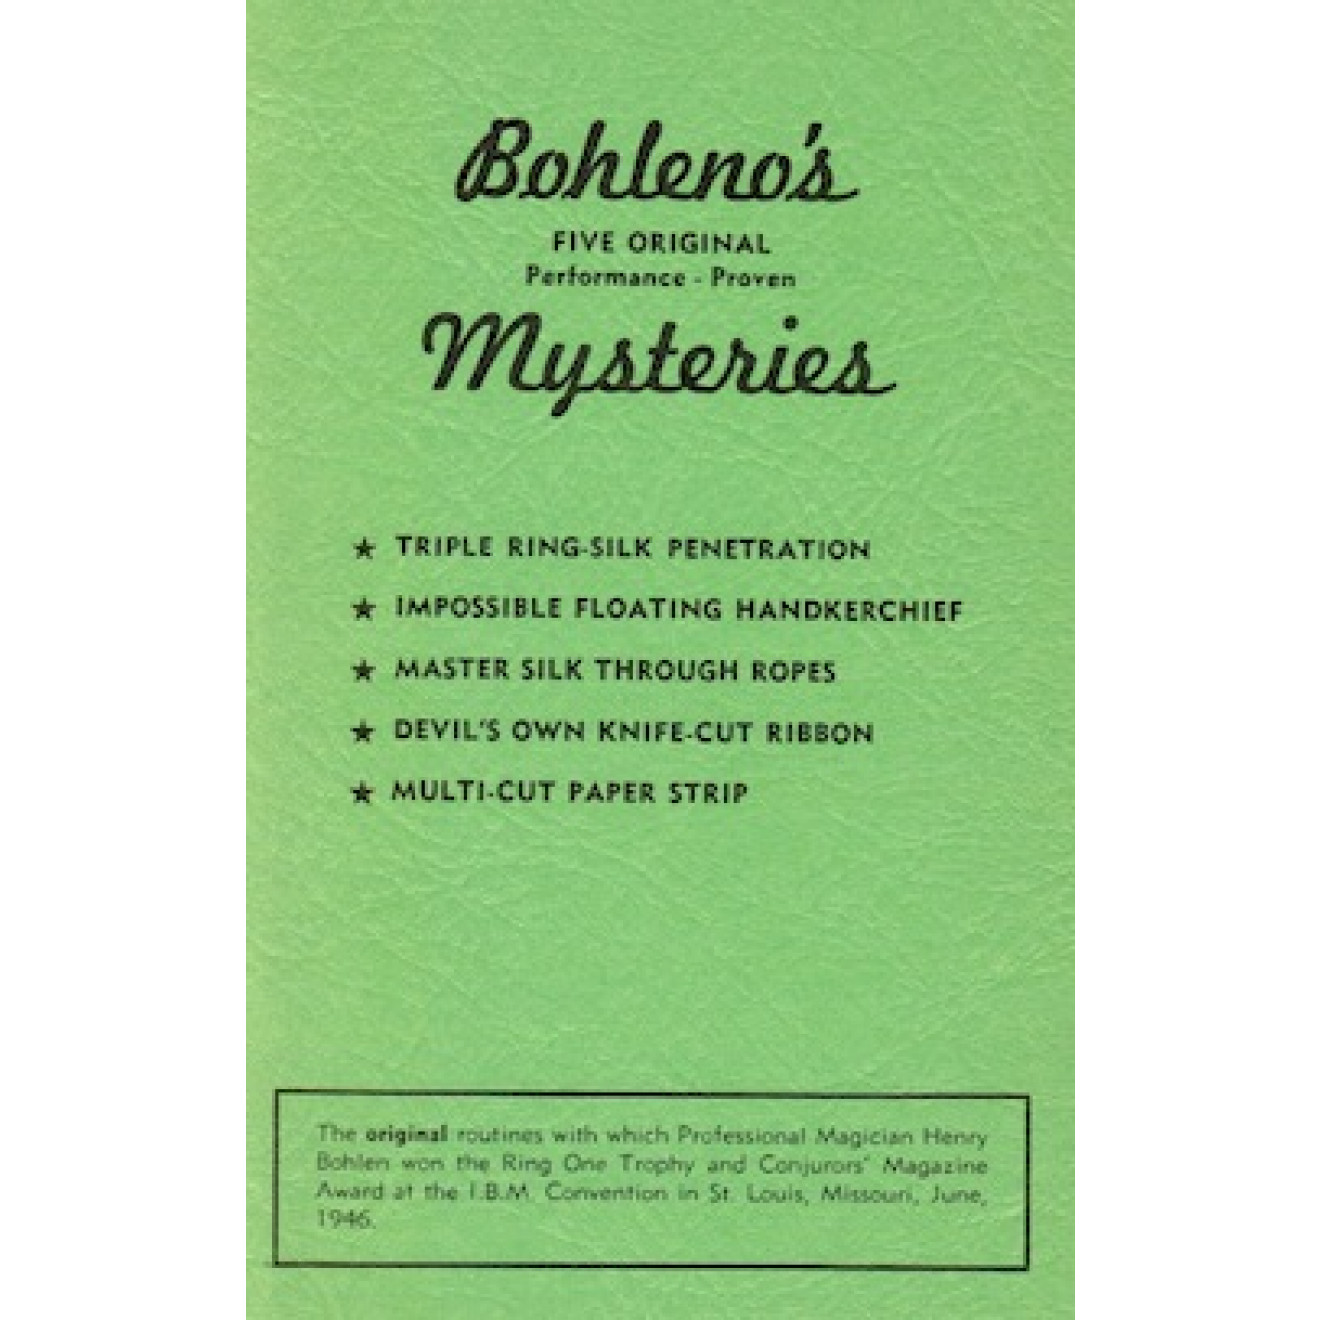 Bohleno's Mysteries - Five Original Performance - Proven